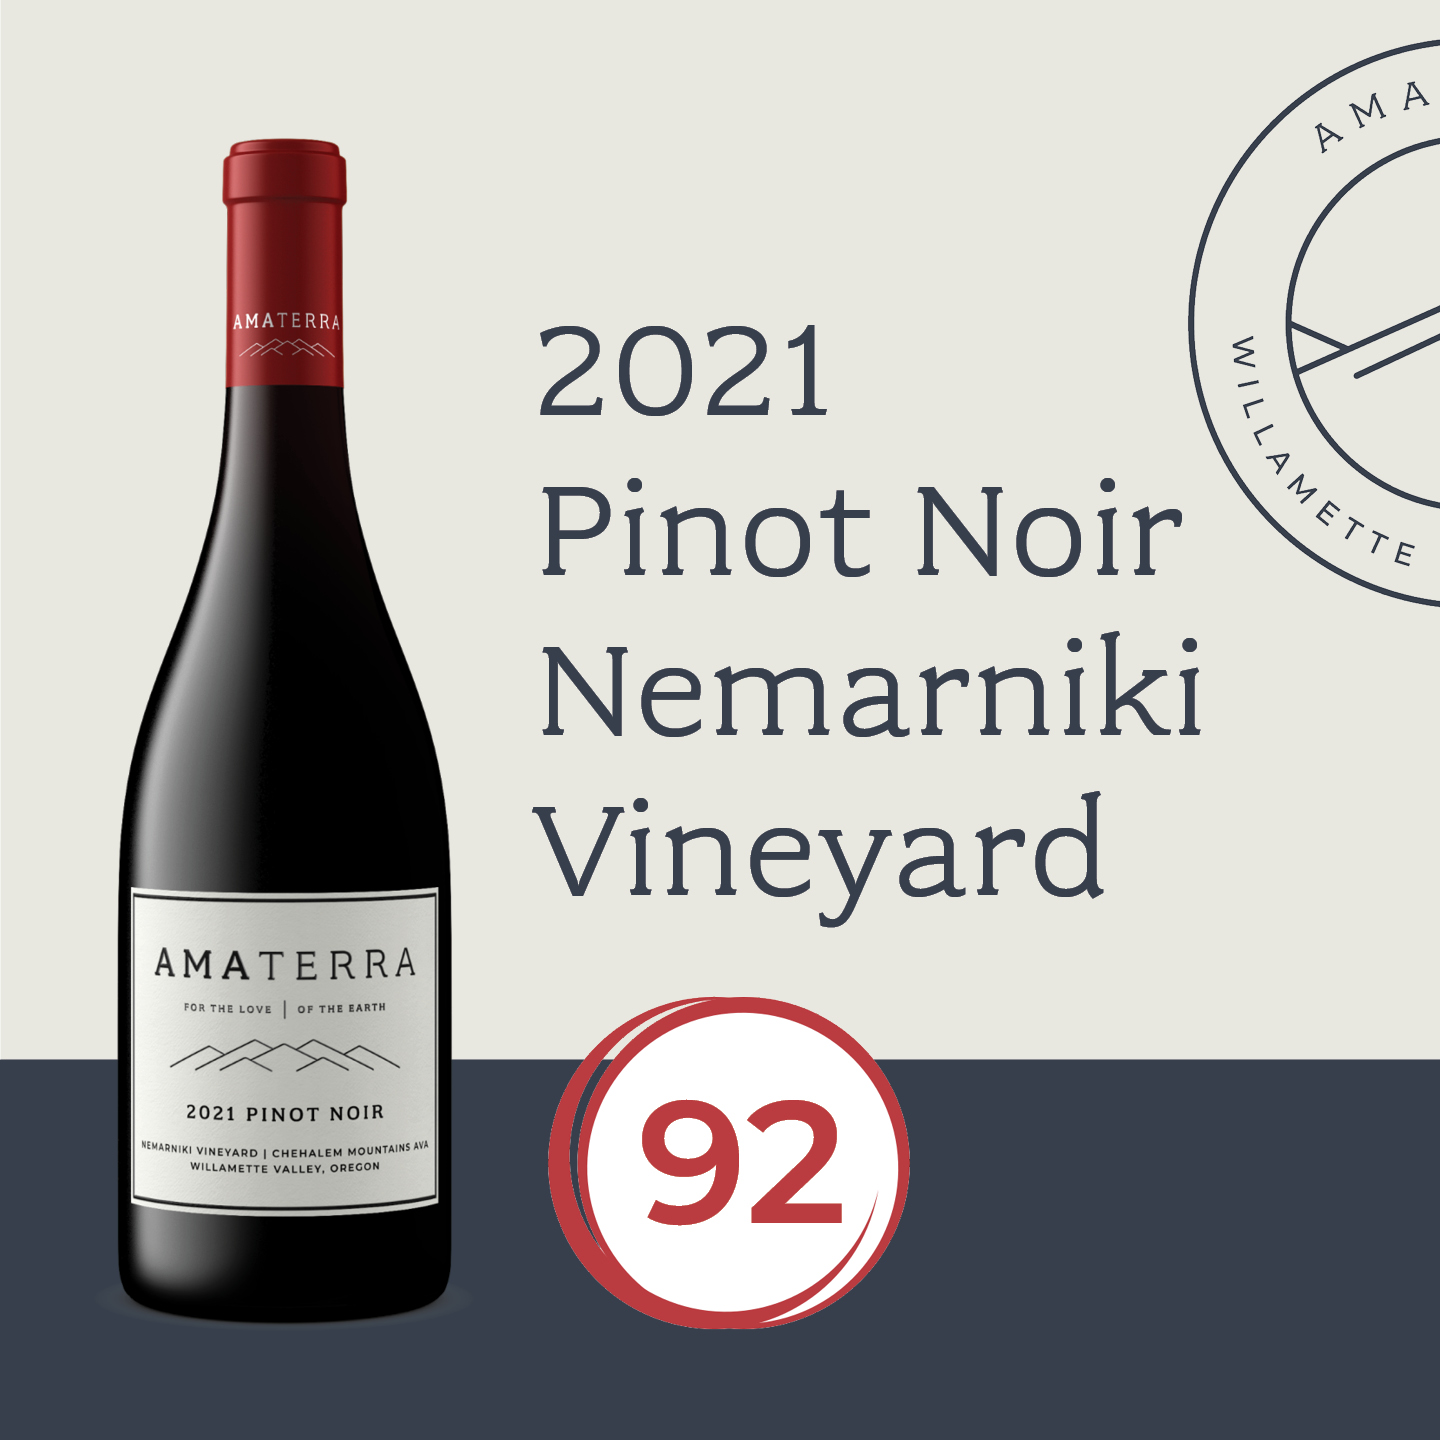 2021 Pinot Noir Nemarniki Vineyard Vinous Review